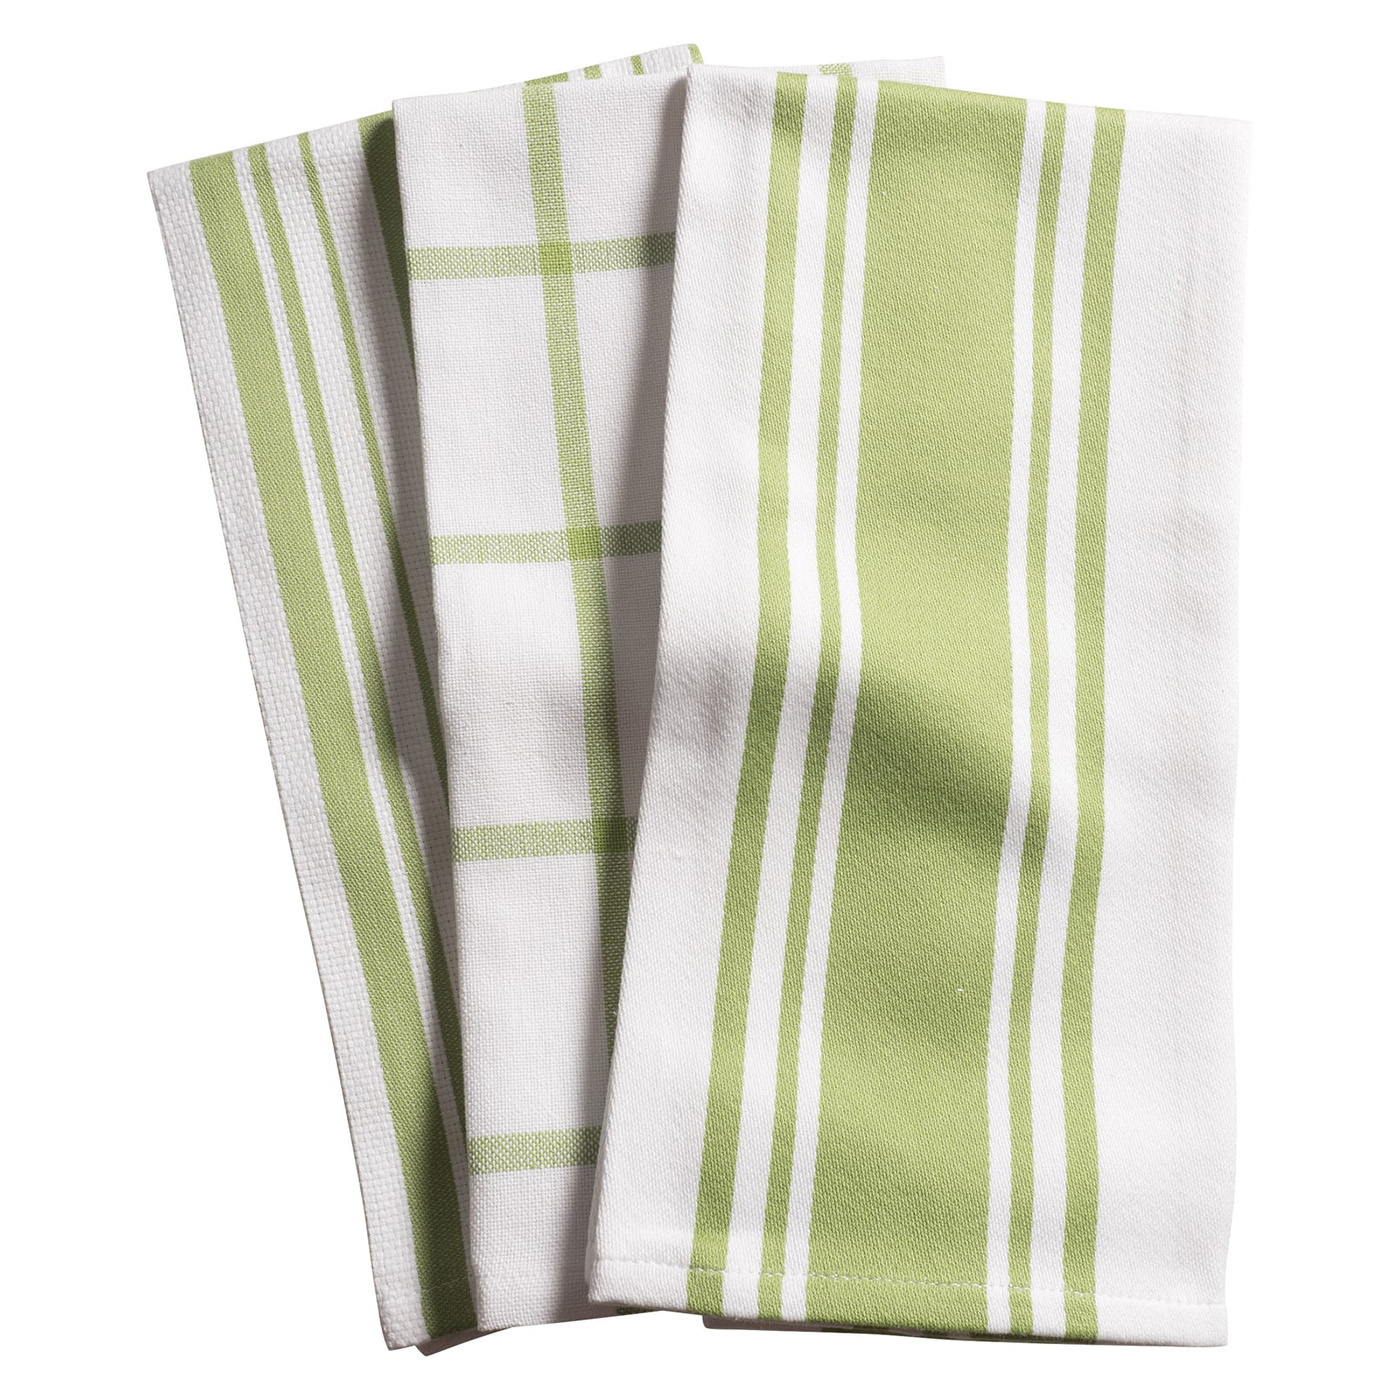 KAF Pantry Towel Set - Sprout